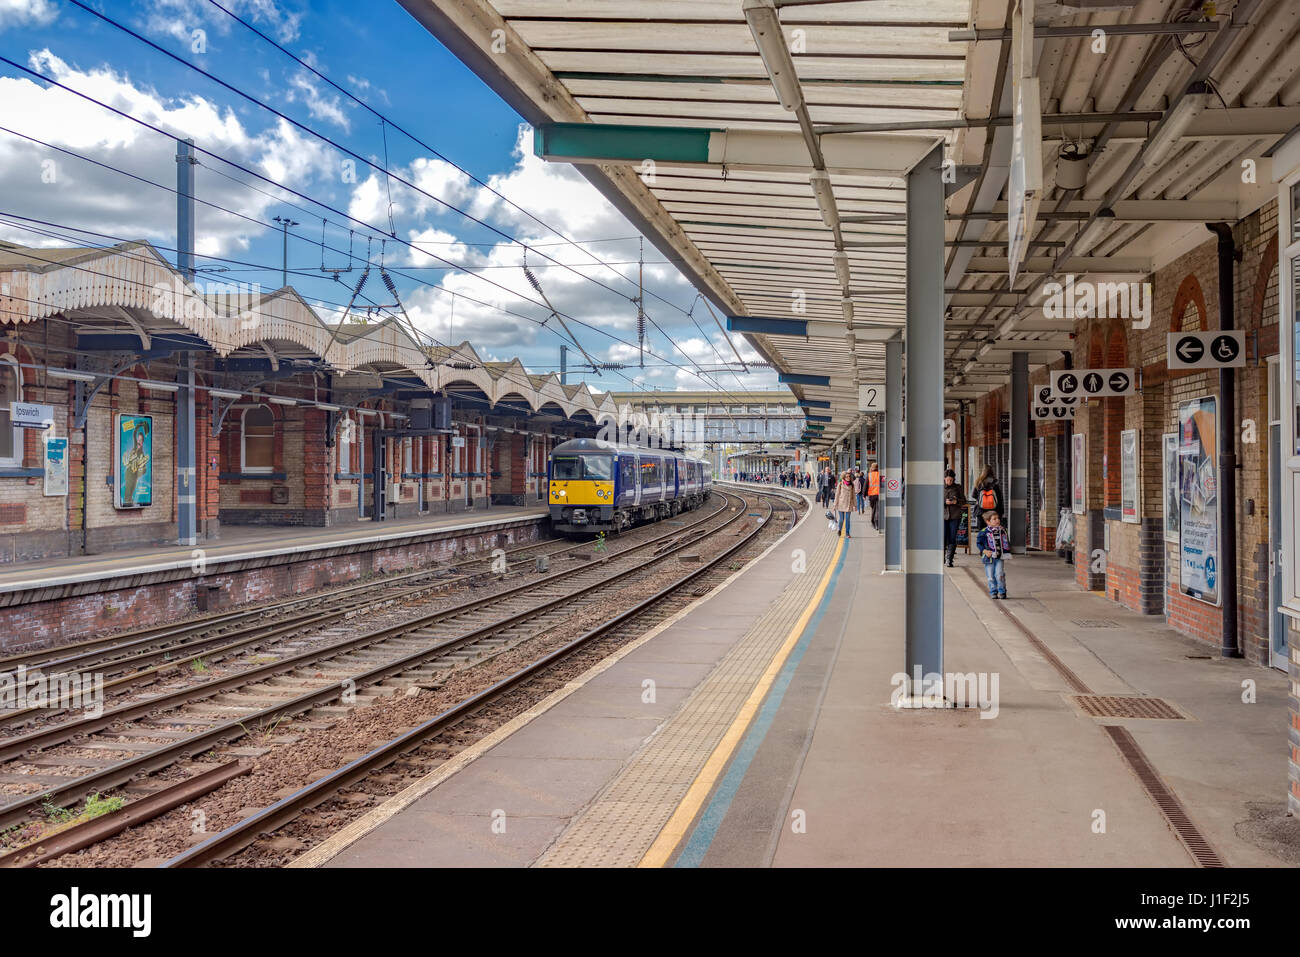 36 Great Eastern Railway Ipswich Railway Station Photo